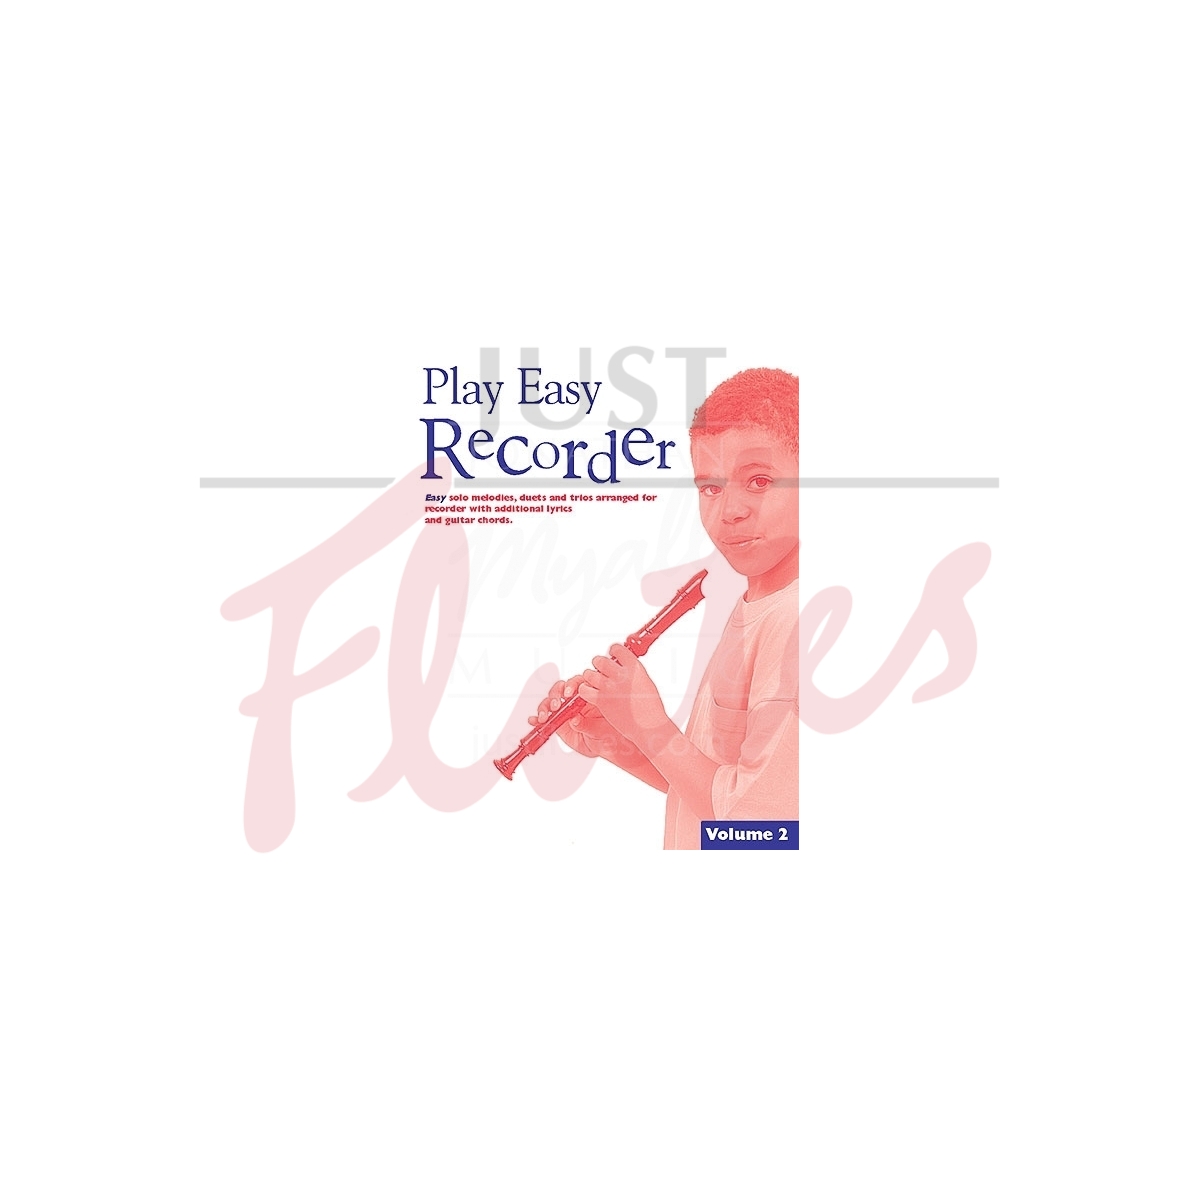 Play Easy Recorder Vol.2 - Easy Solos, Duets and Trios